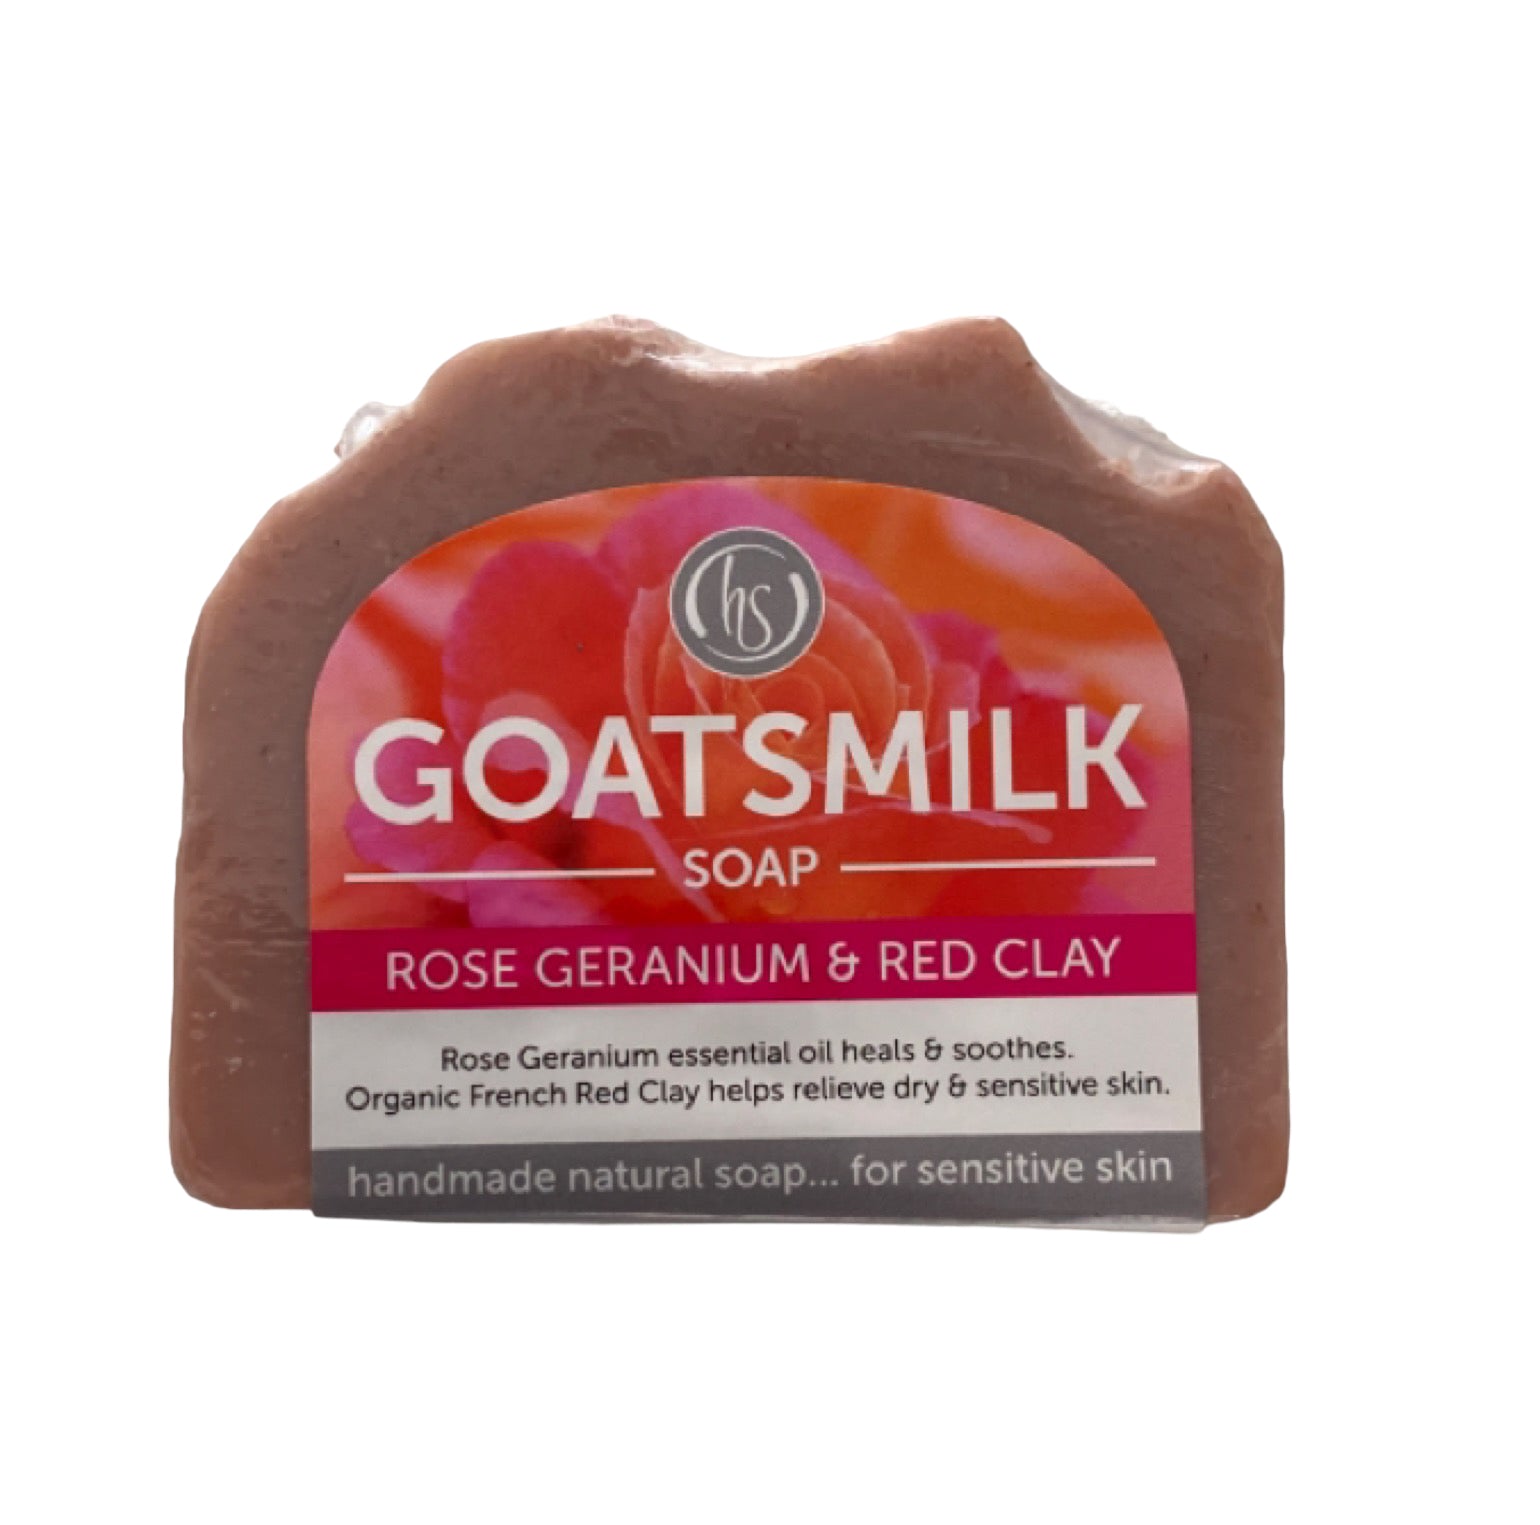 Garden Dream Gardener Stone Goatmilk Soap Gift - The Renmy Store Homewares & Gifts 